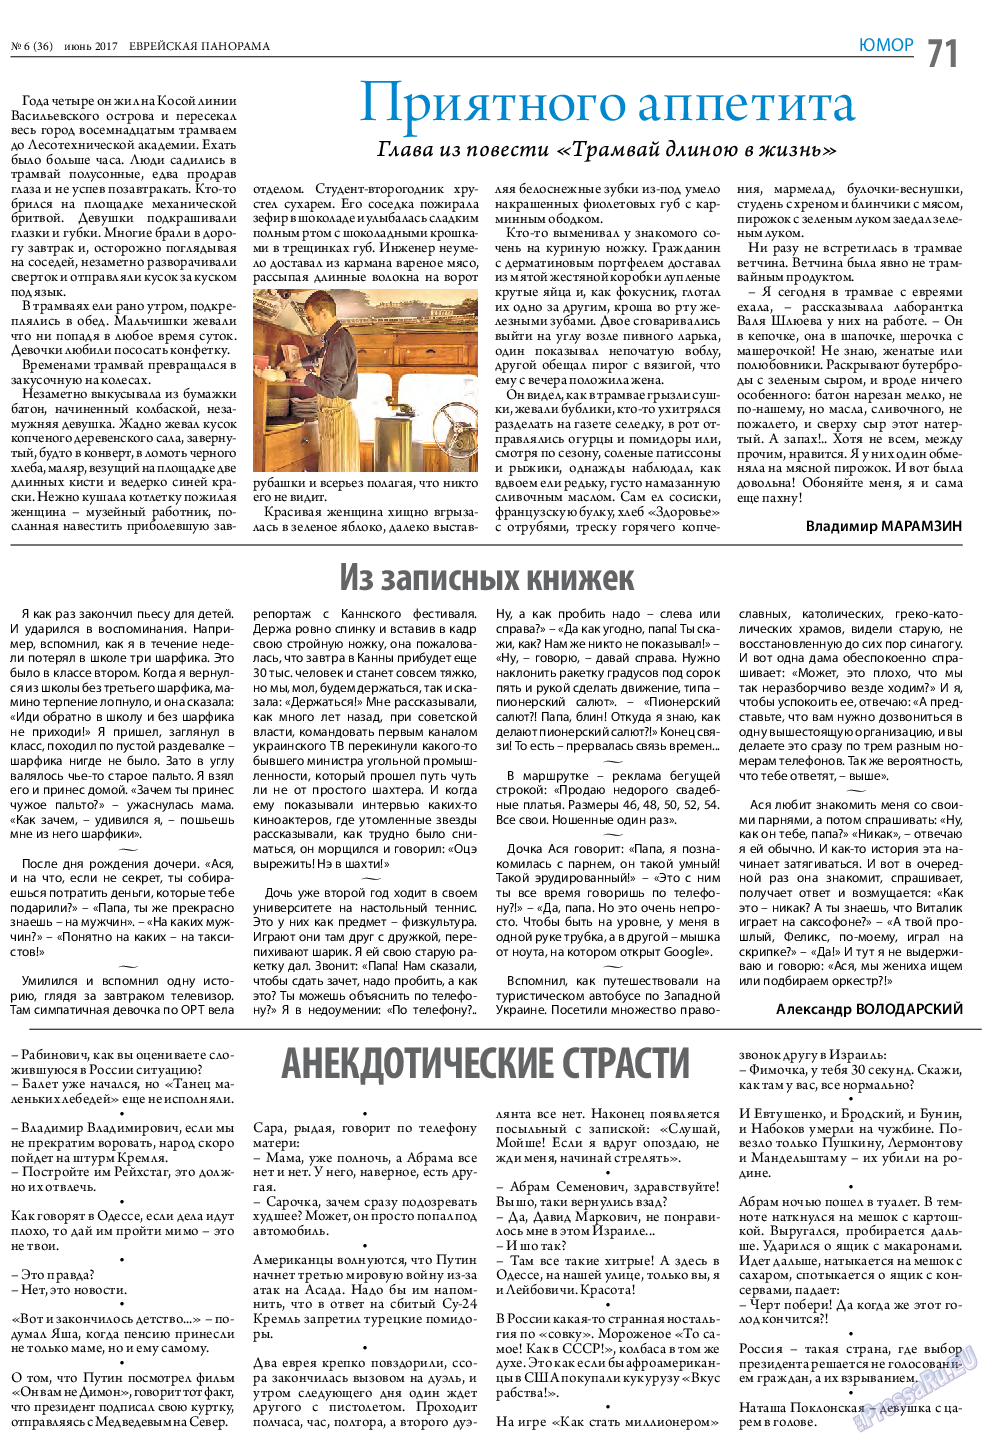 Еврейская панорама, газета. 2017 №6 стр.71